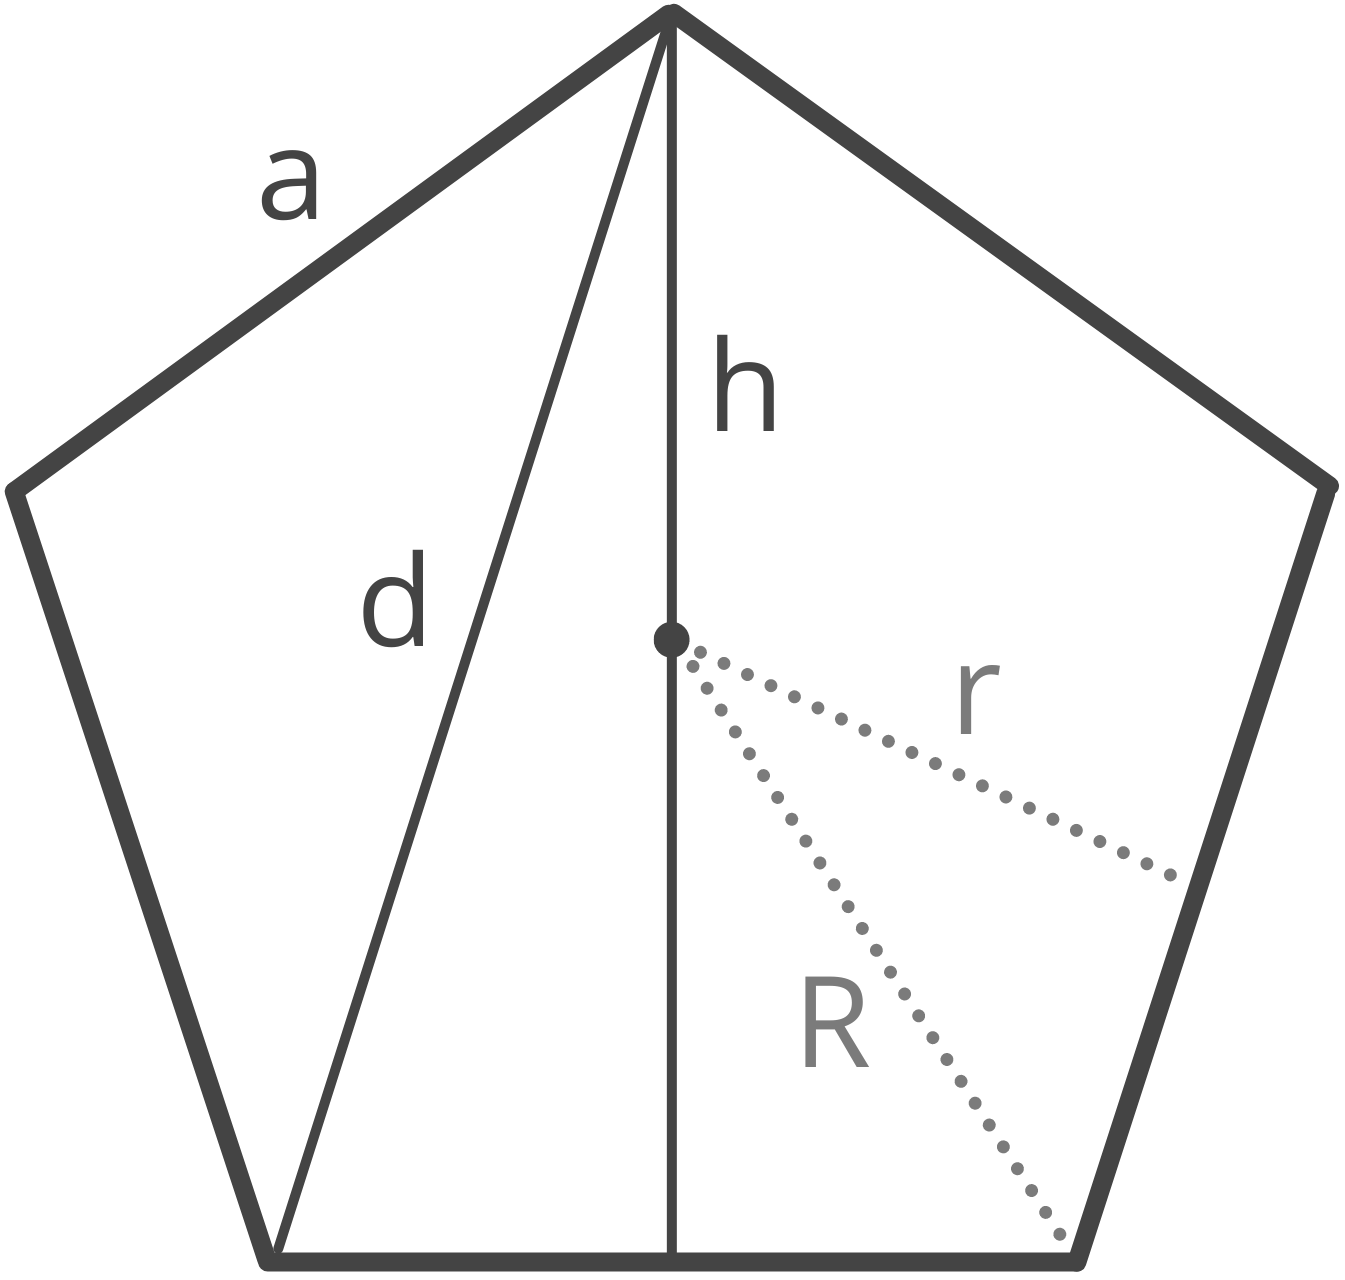 diagram of a pentagon showing the sides, diagonal, height, circumradius, and apothem